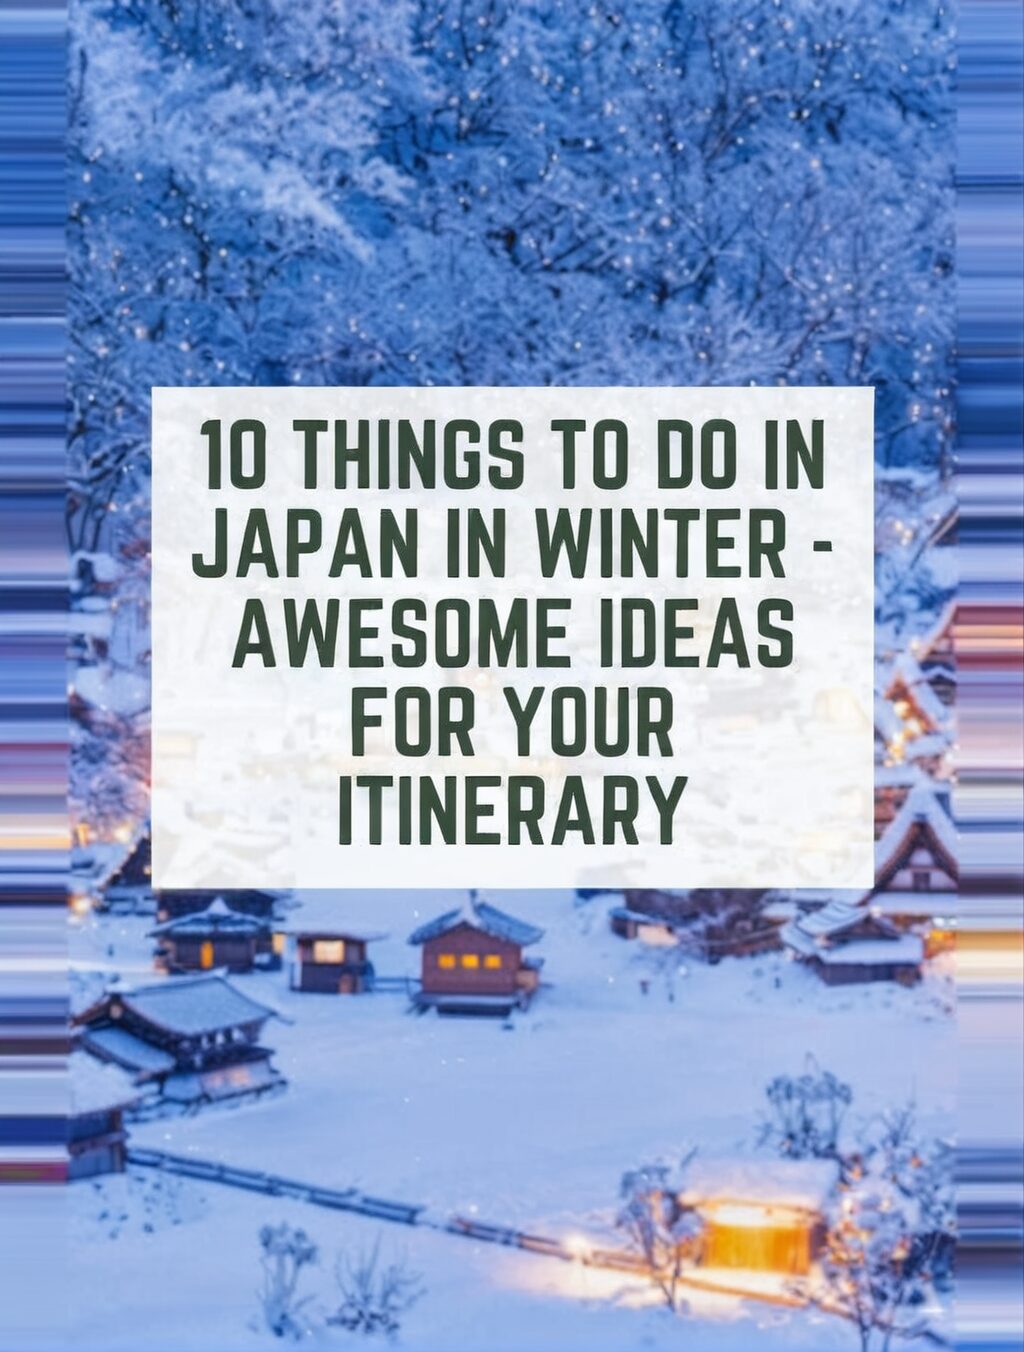 japan winter itinerary december